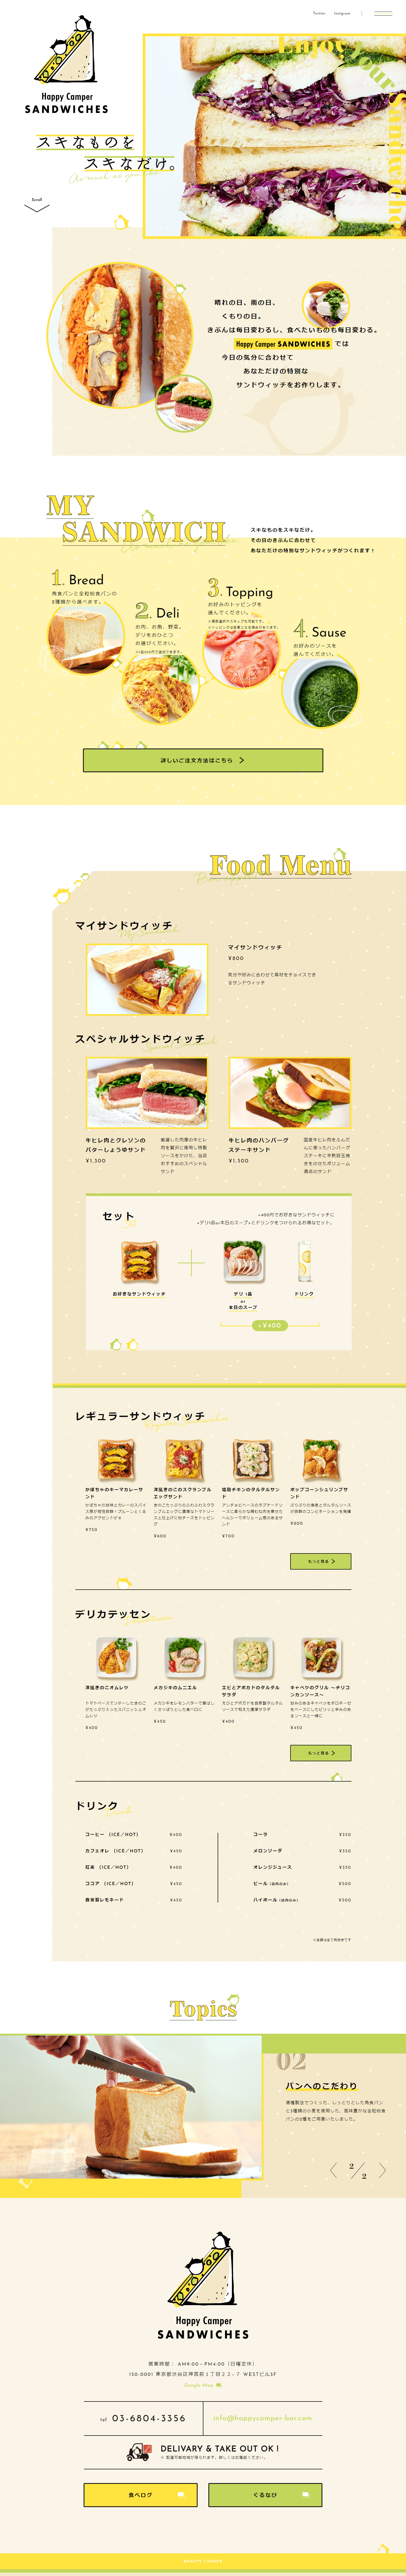 Happy Camper三明治品牌网站设计